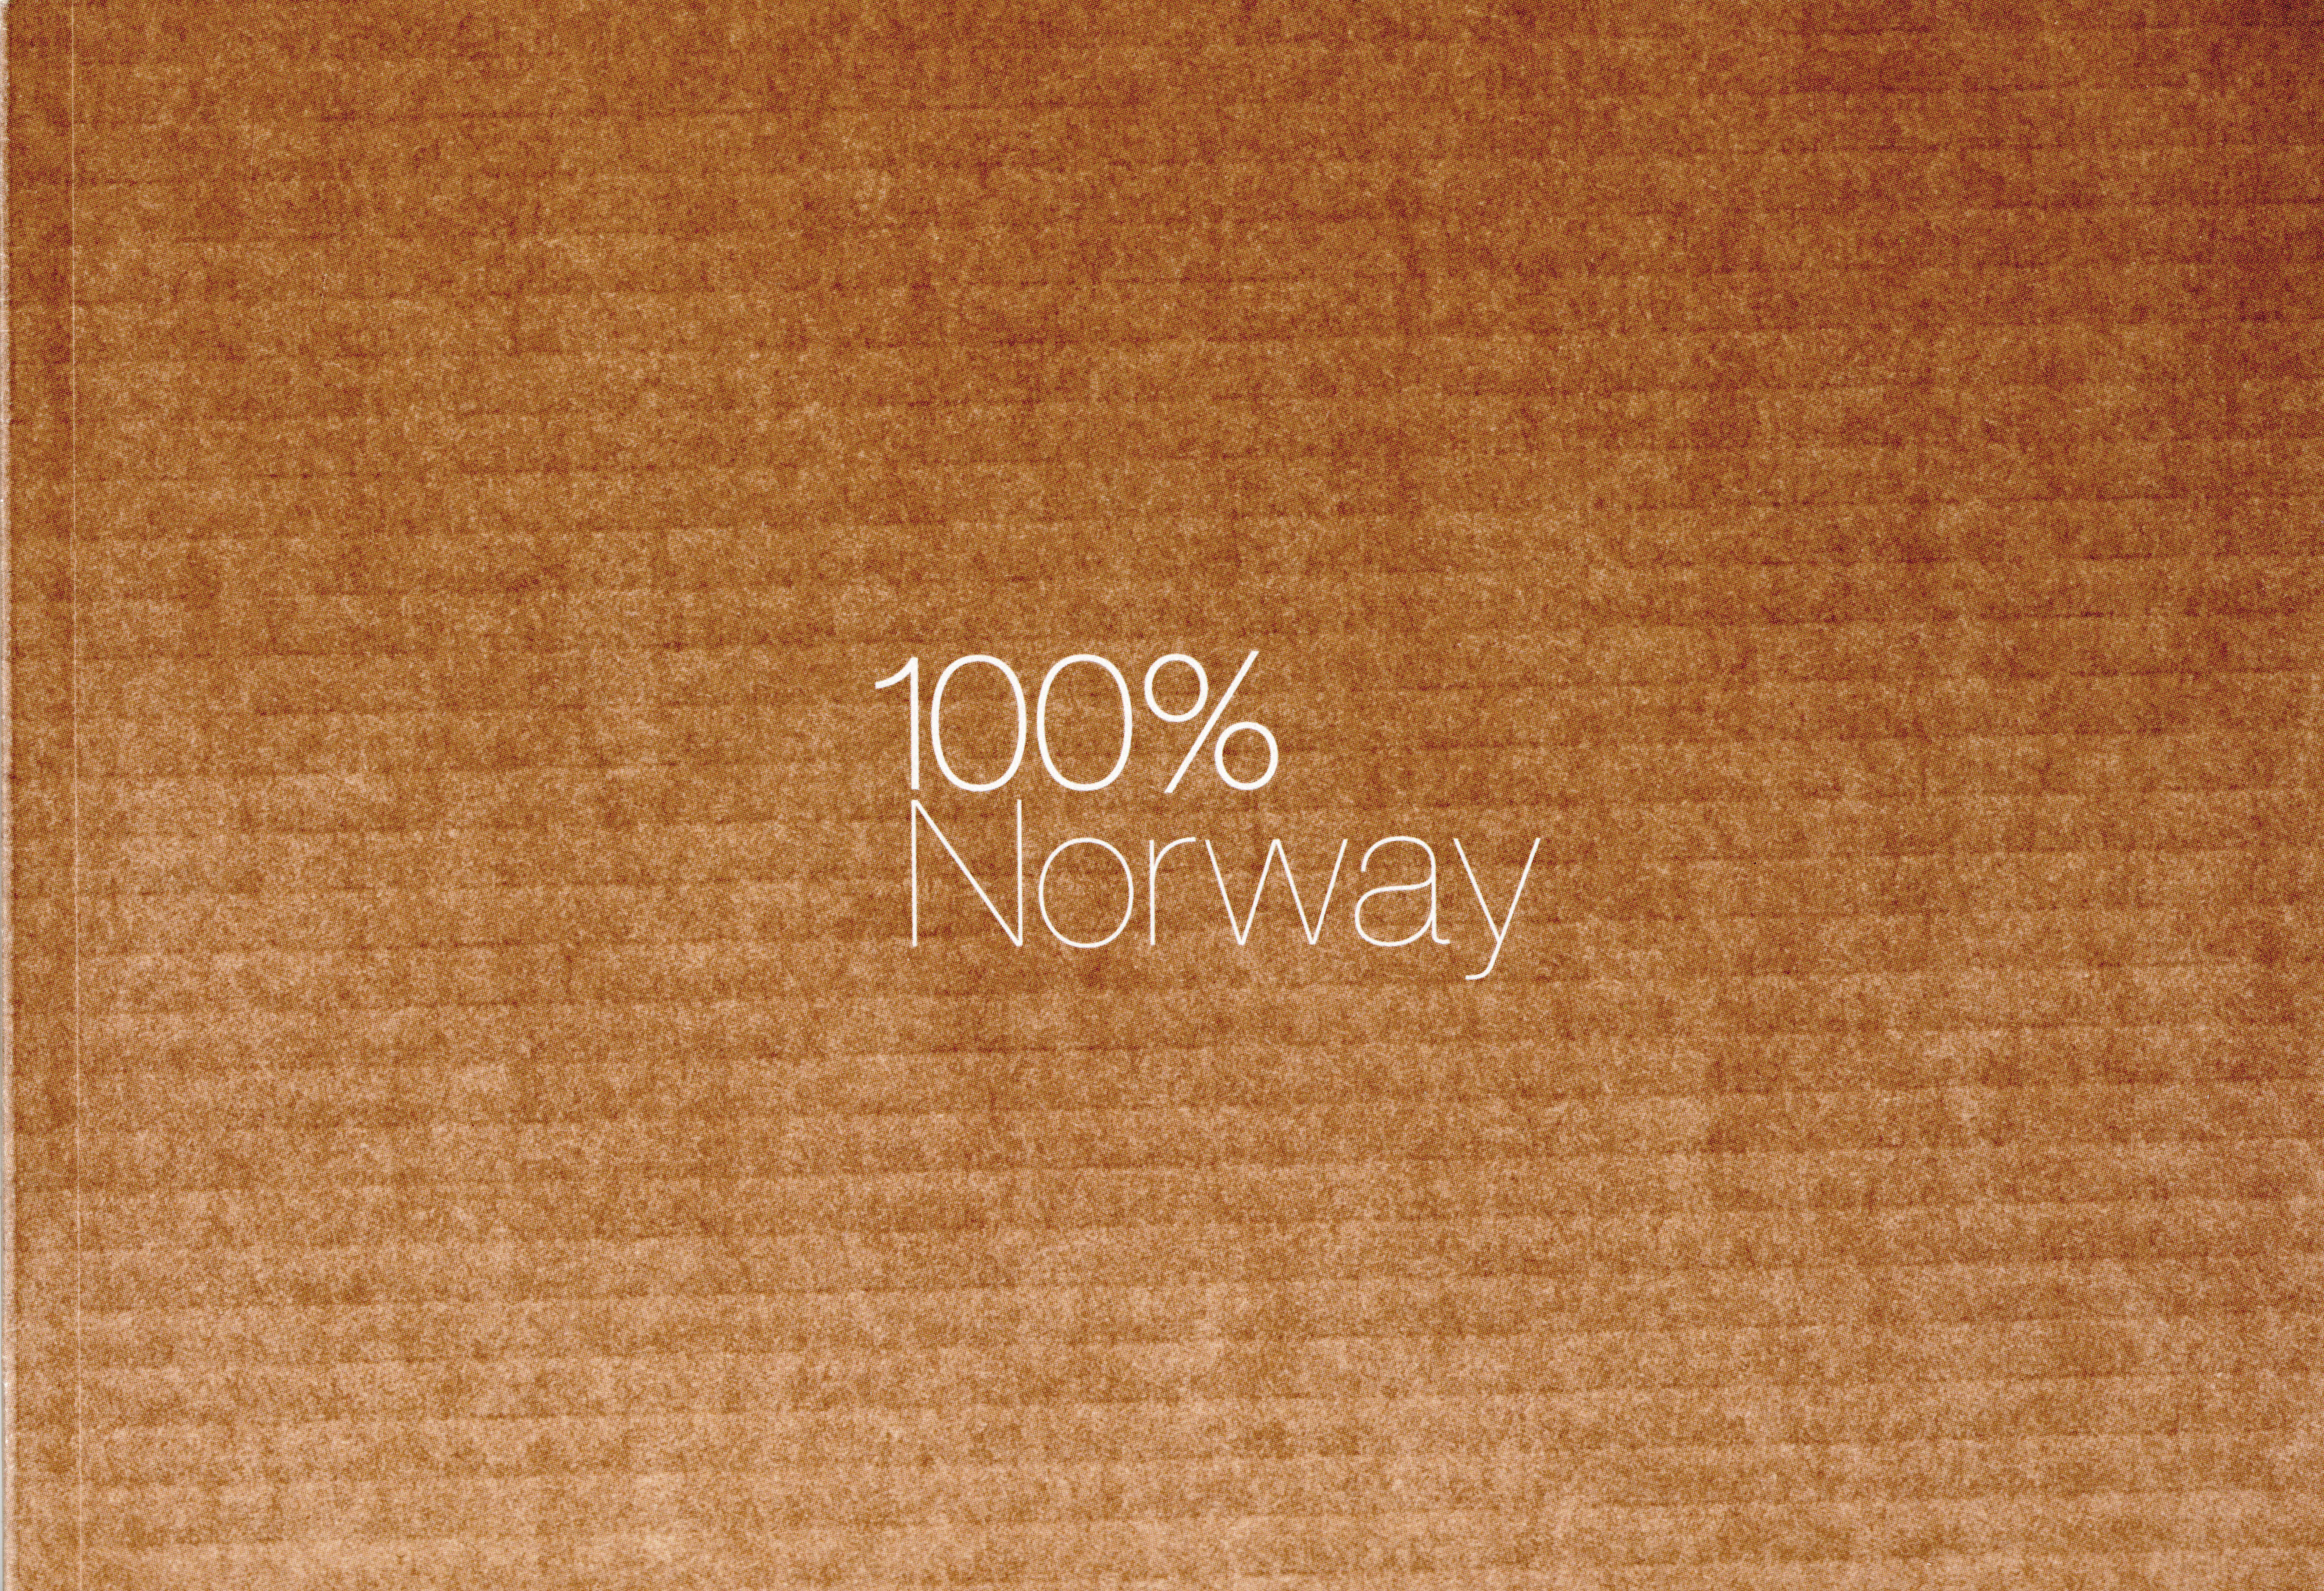 100% Norway part 1